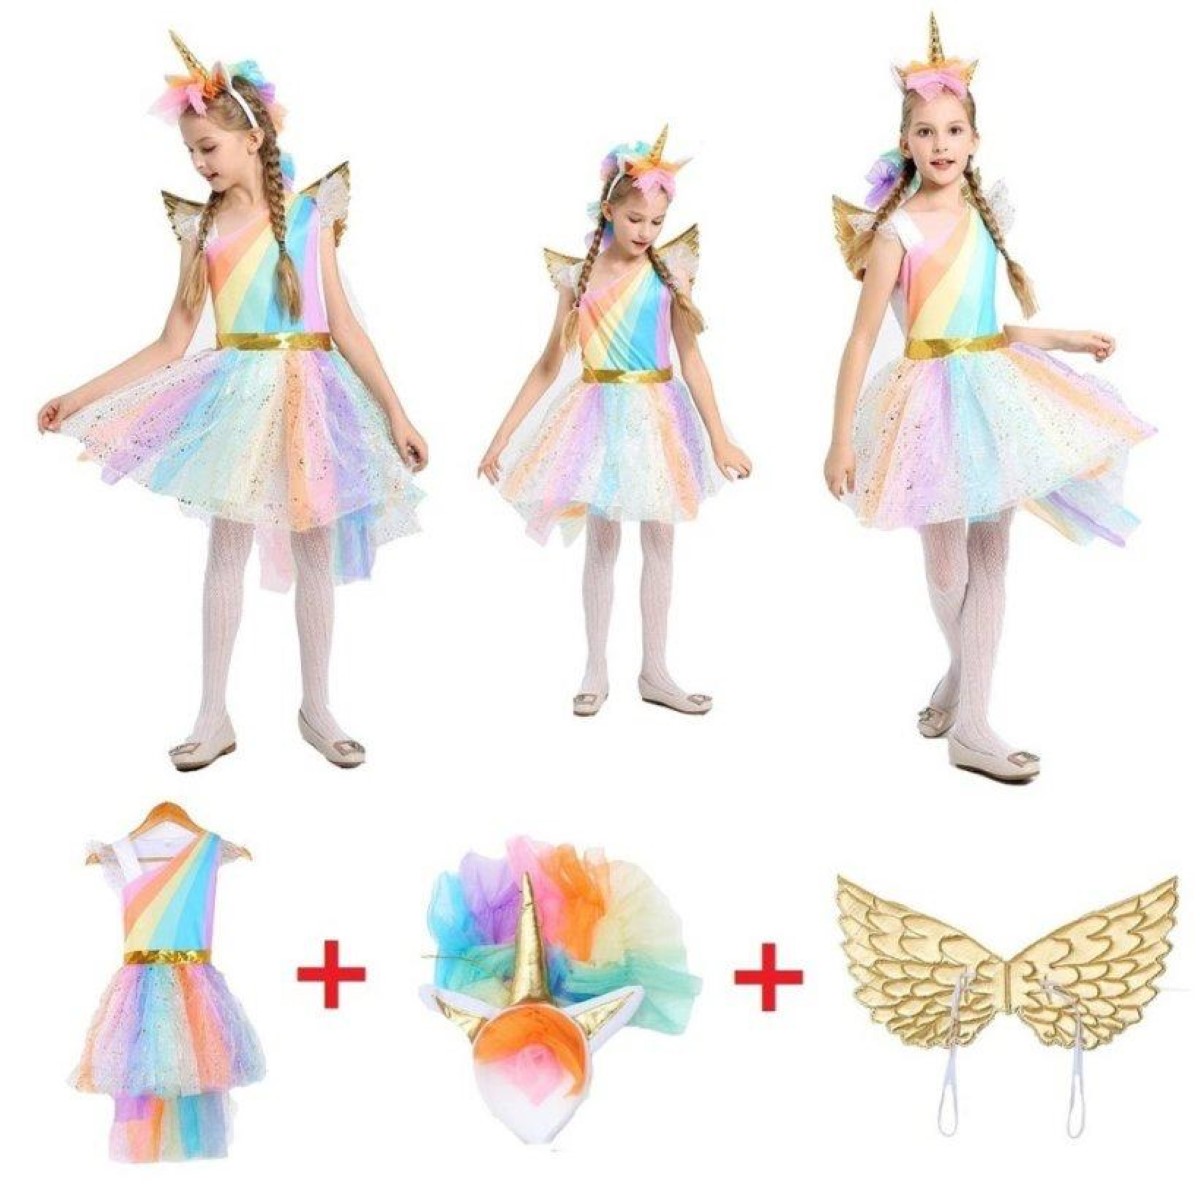 Pikkaboo Rainbow Unicorn Dress - Medium